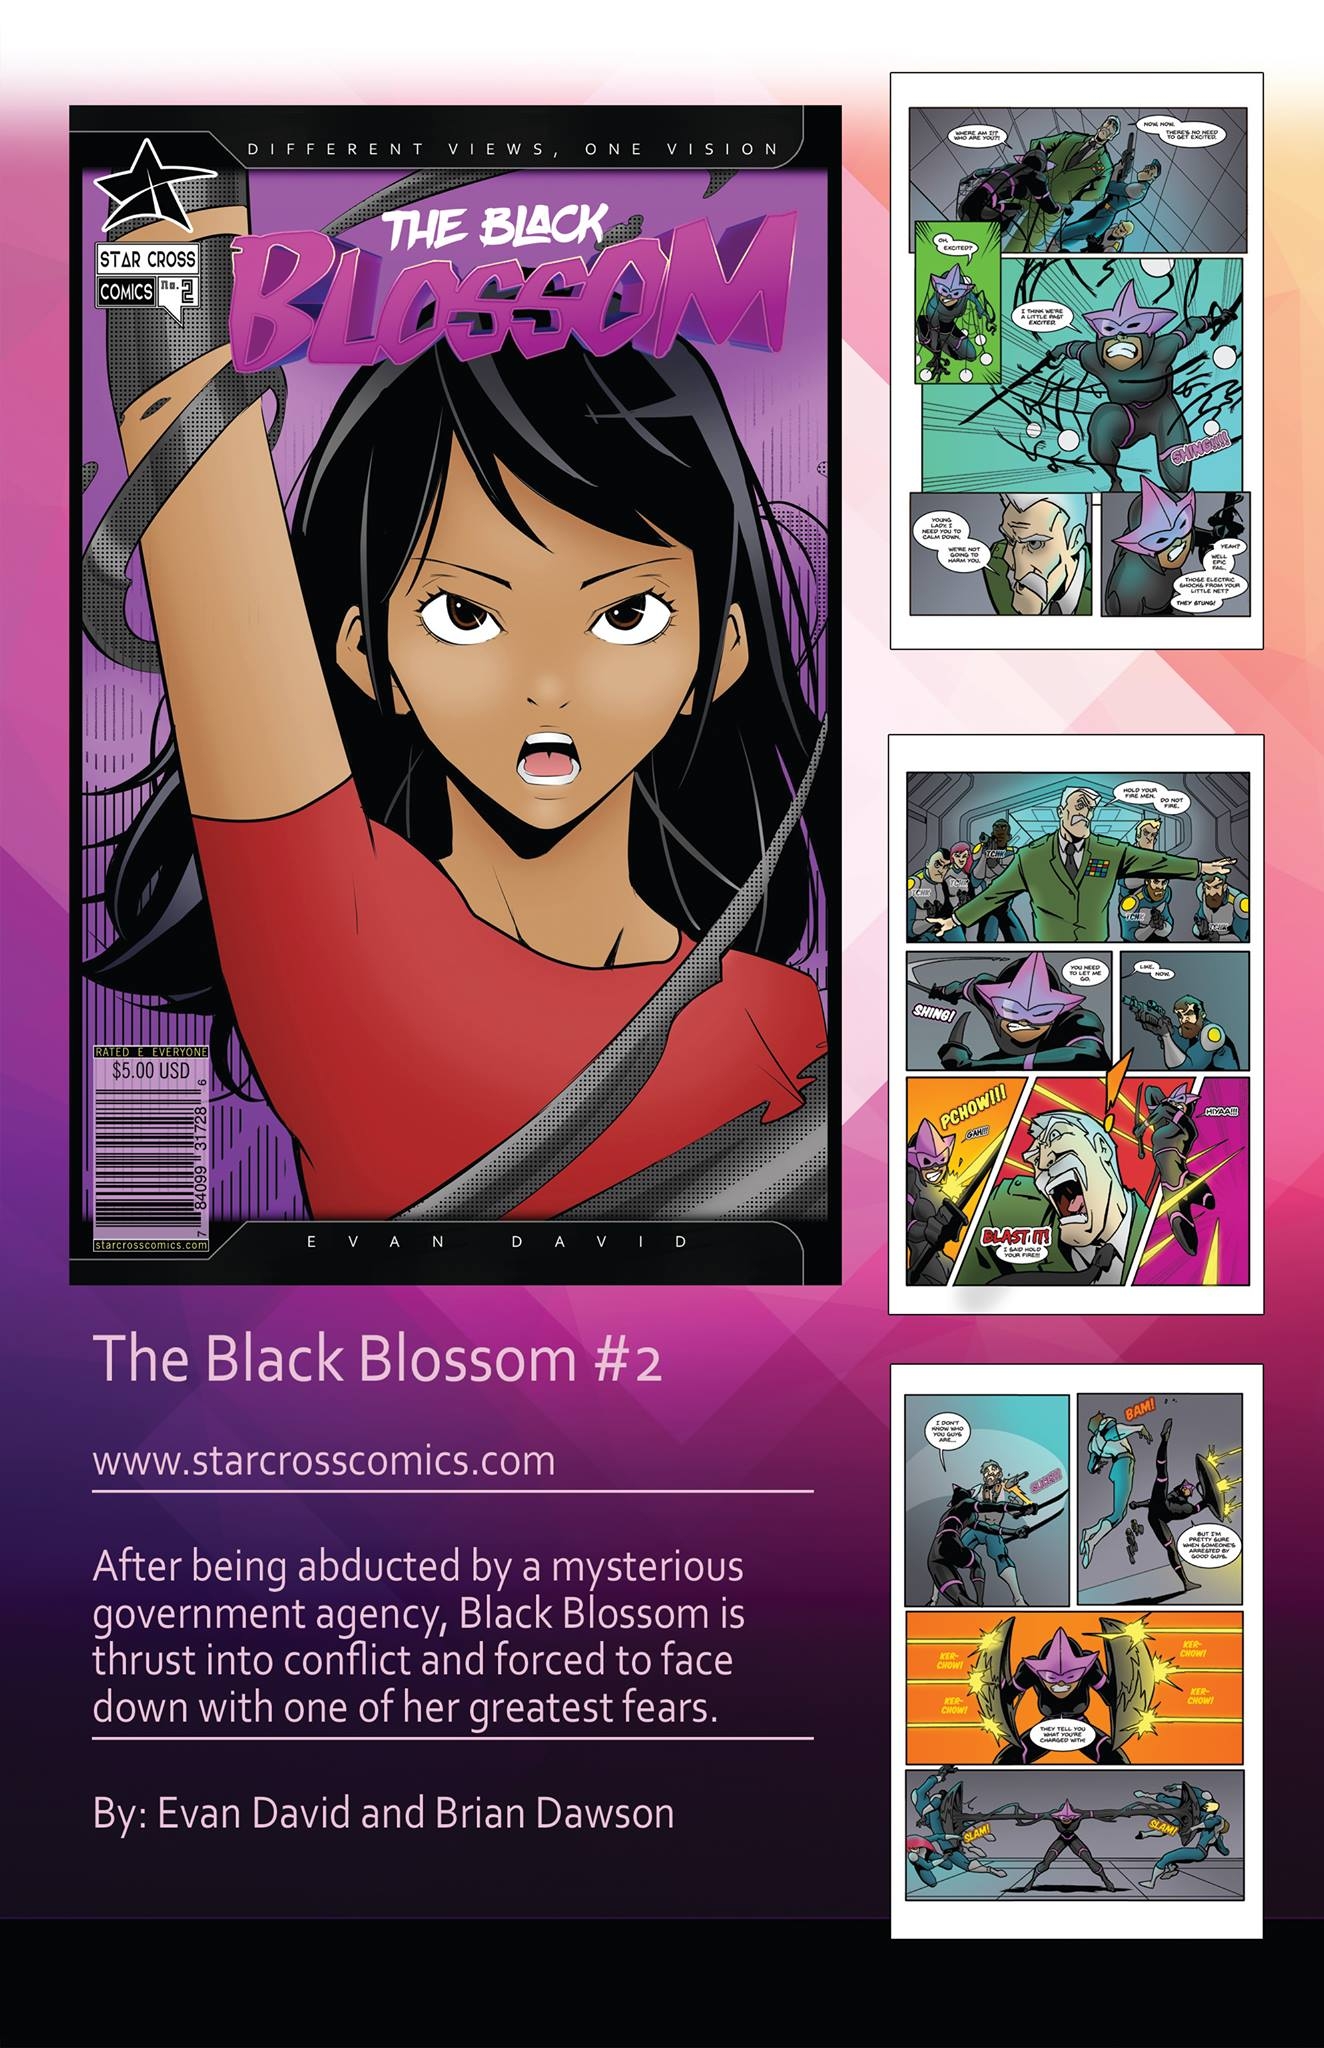 STAR CROSS COMICS spotlight this week is Evan David’s The Black Blossom #2